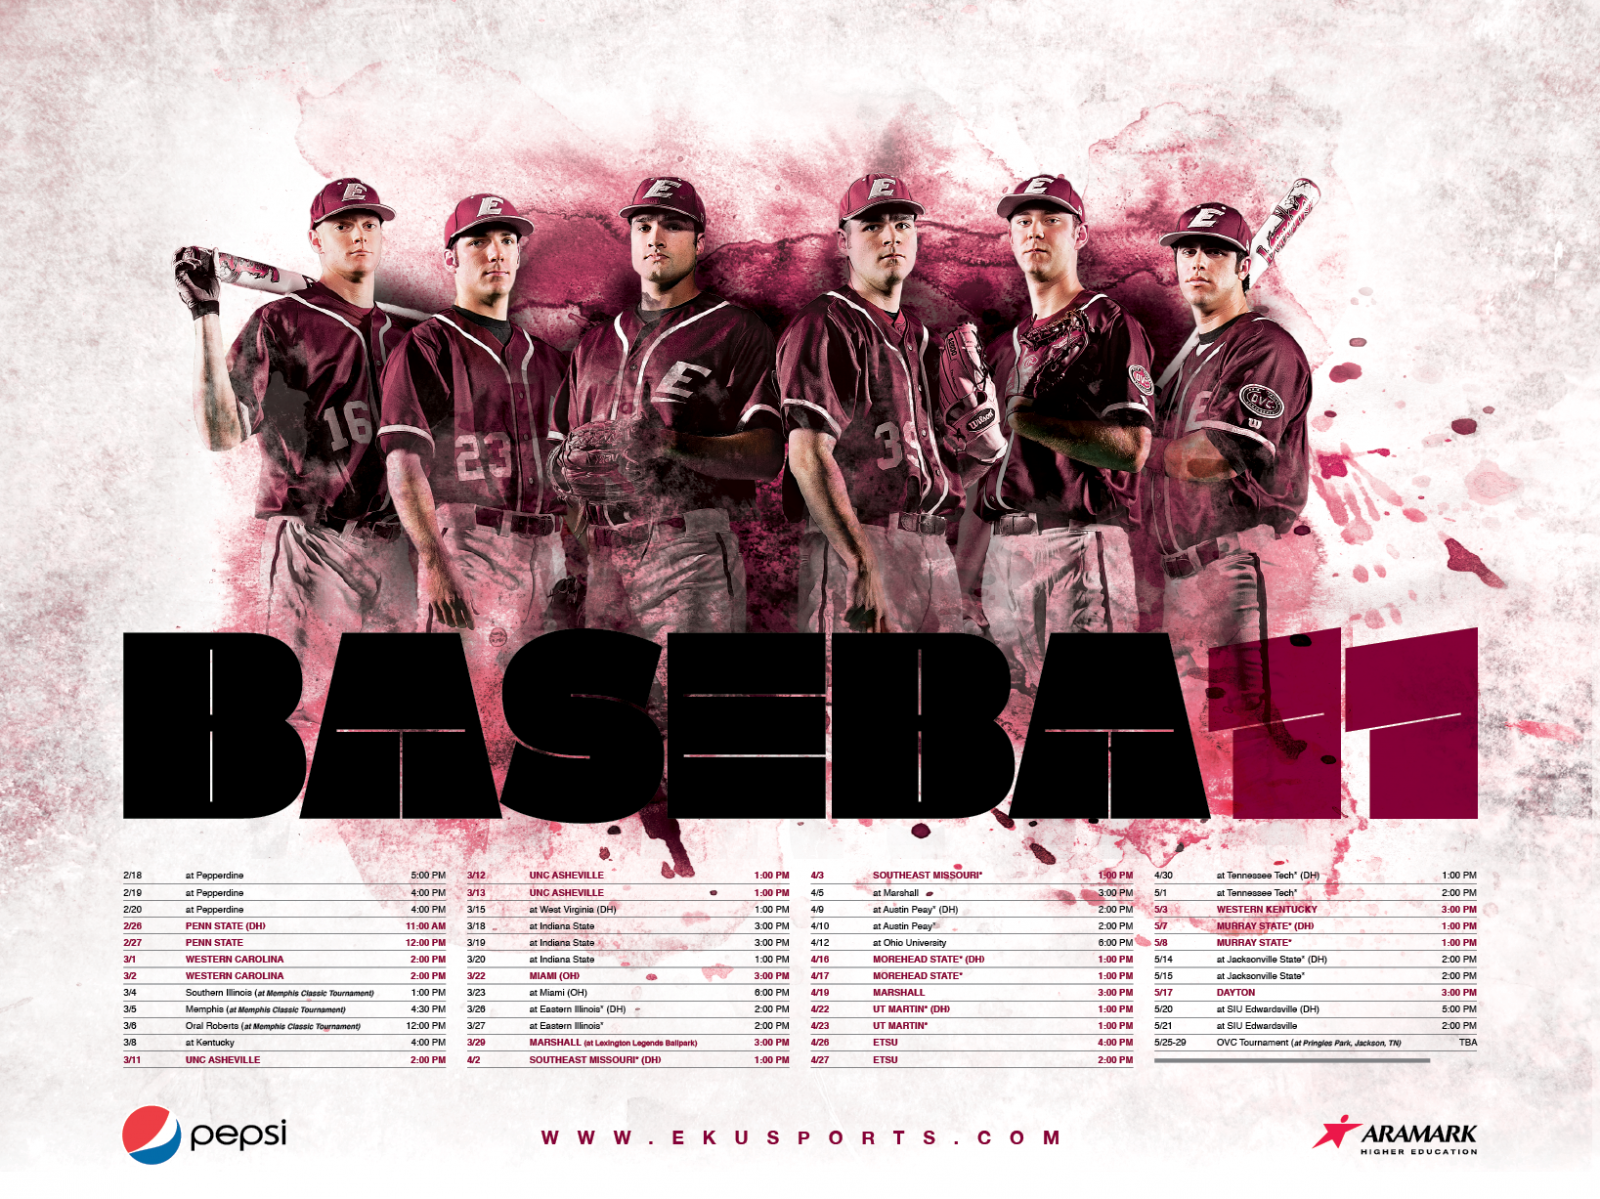 2011 Eastern Kentucky University baseball poster by Adam Martin